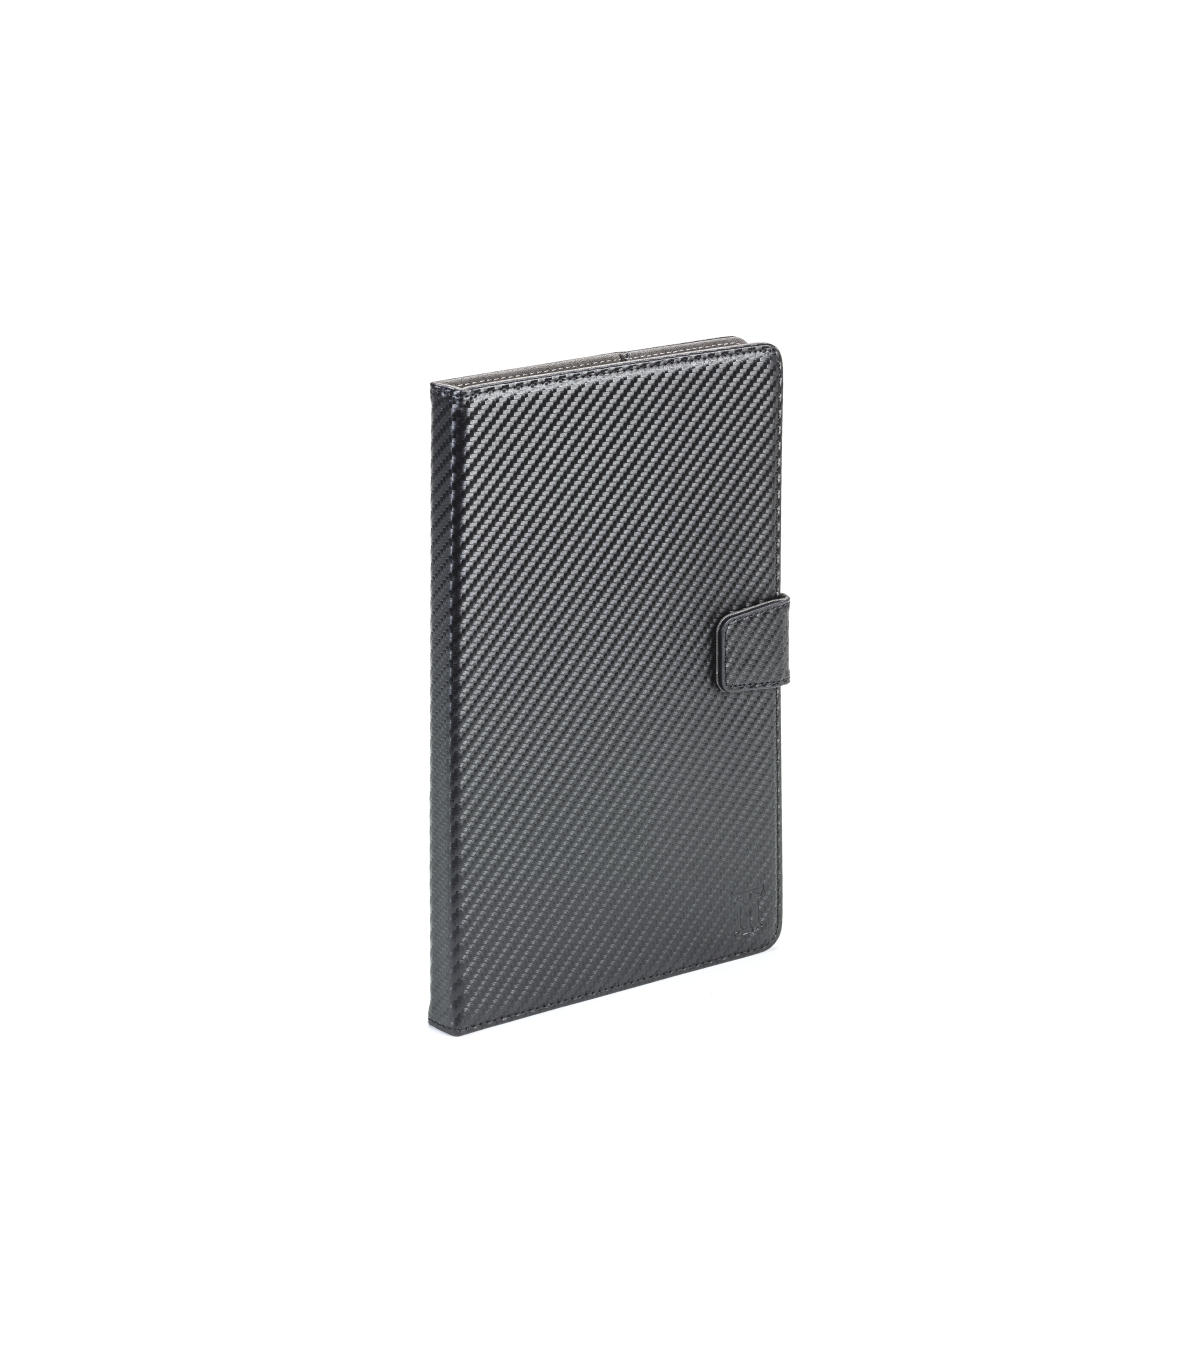 Funda Tablet Maillon Trifold Stand Case Lenovo M10 Black